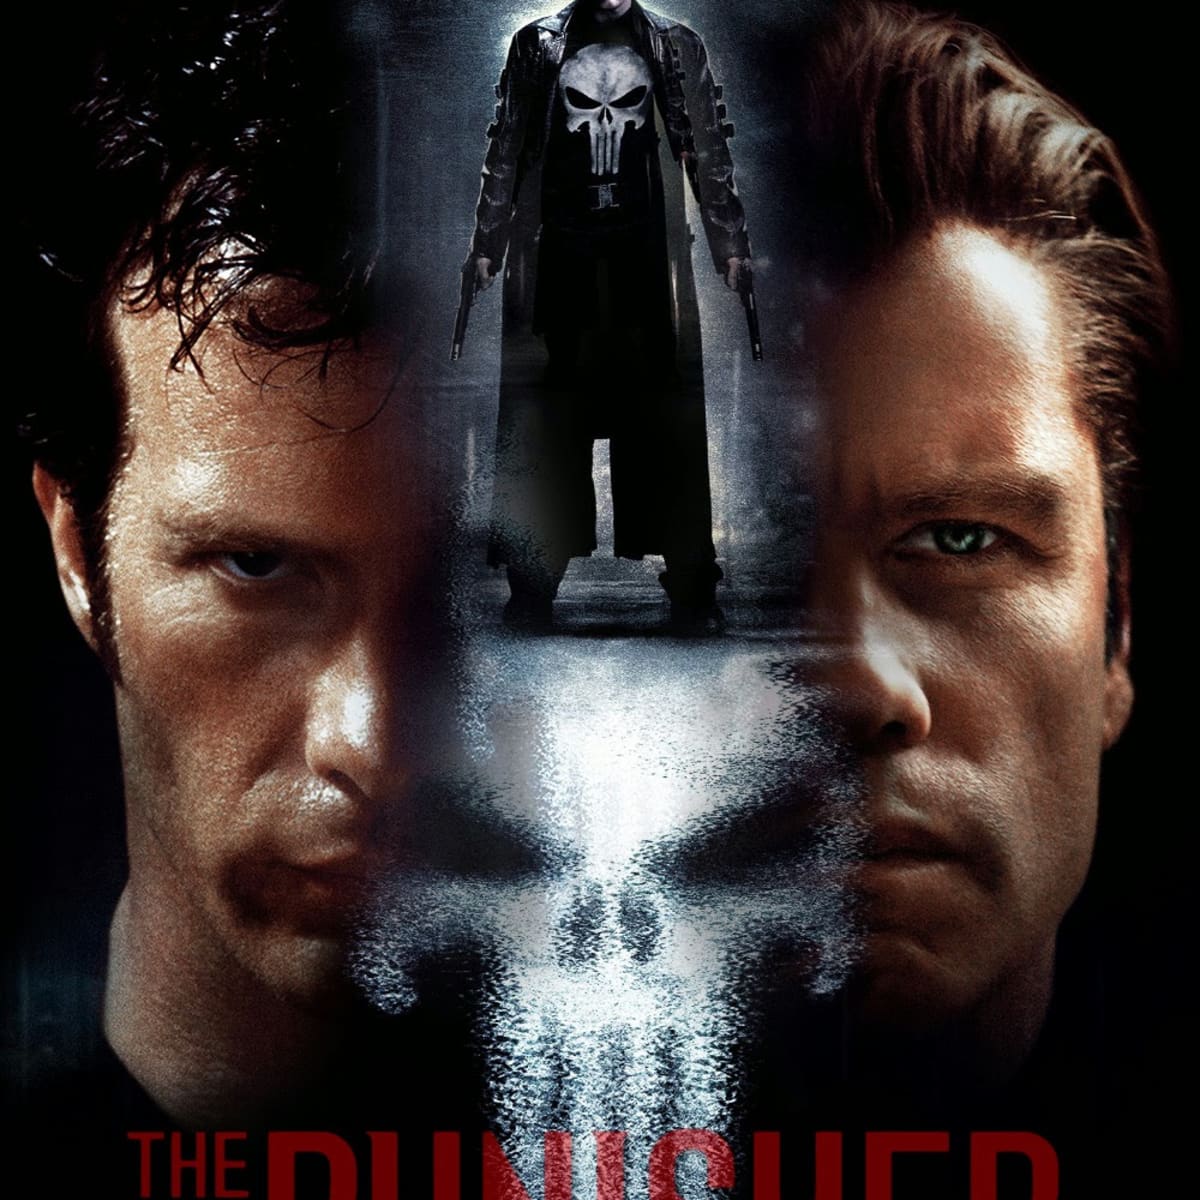 The Punisher (2004) - Plot - IMDb